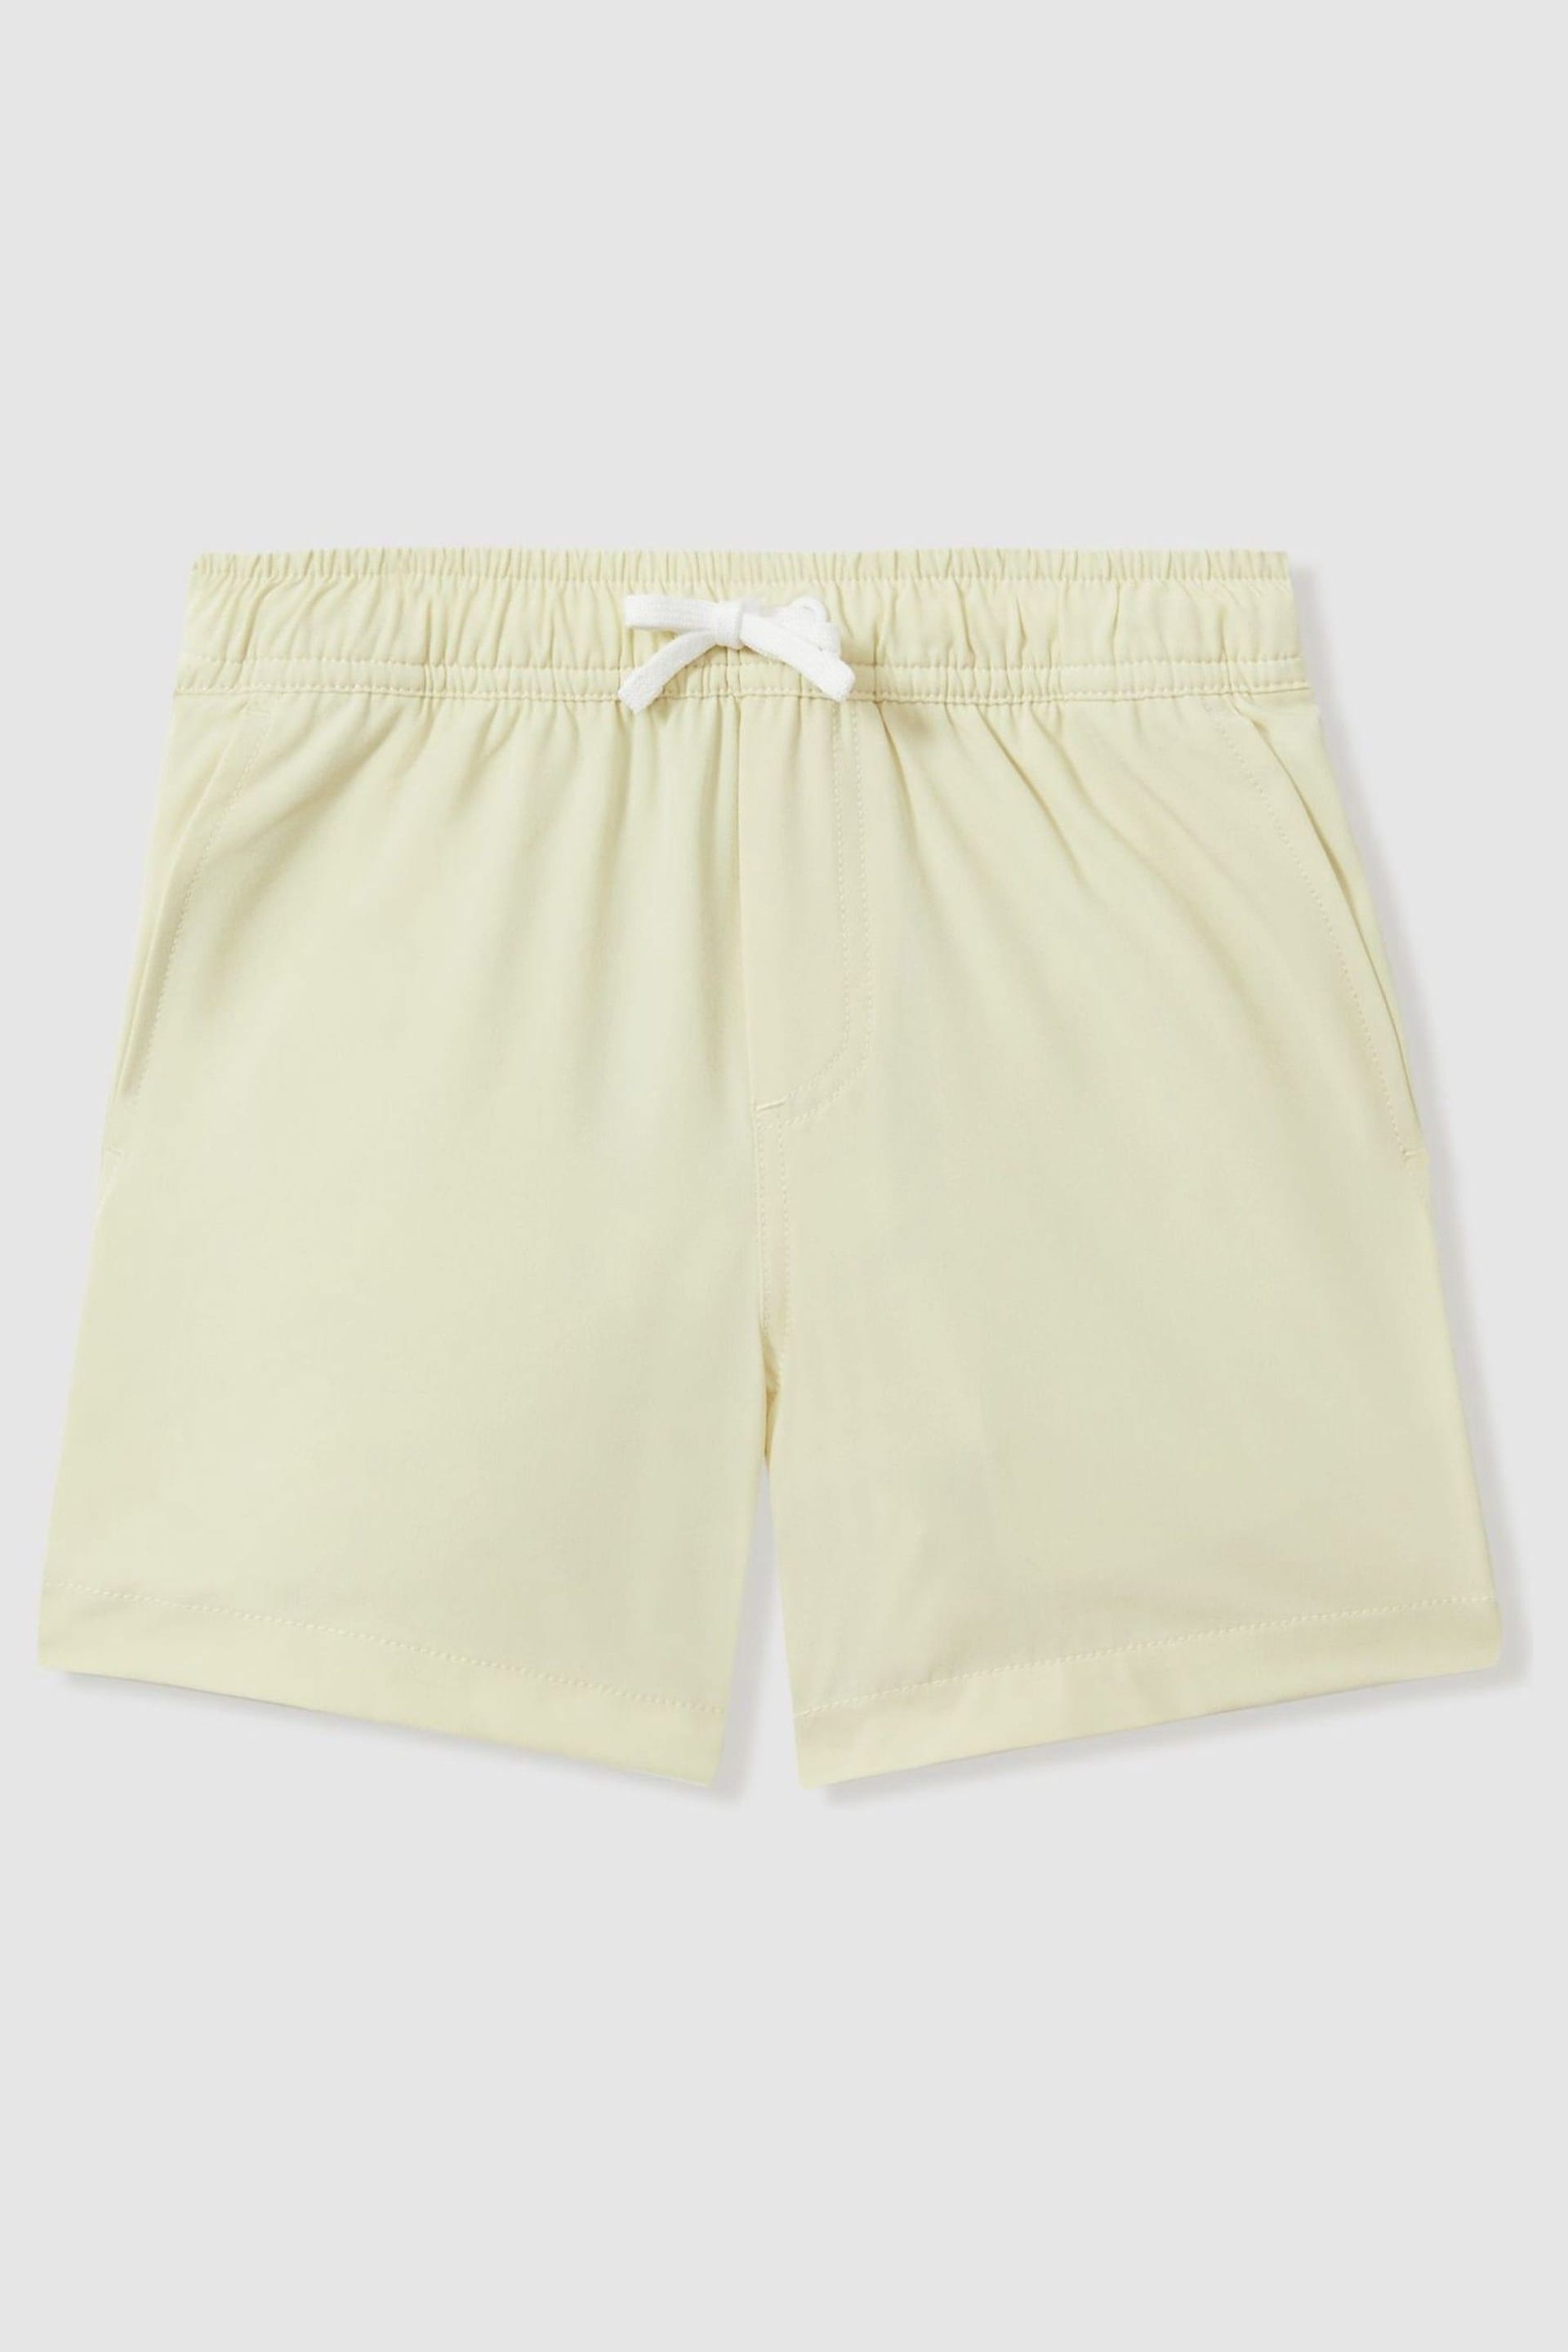 Reiss Lemon Shore Junior Plain Drawstring Waist Swim Shorts - Image 1 of 3